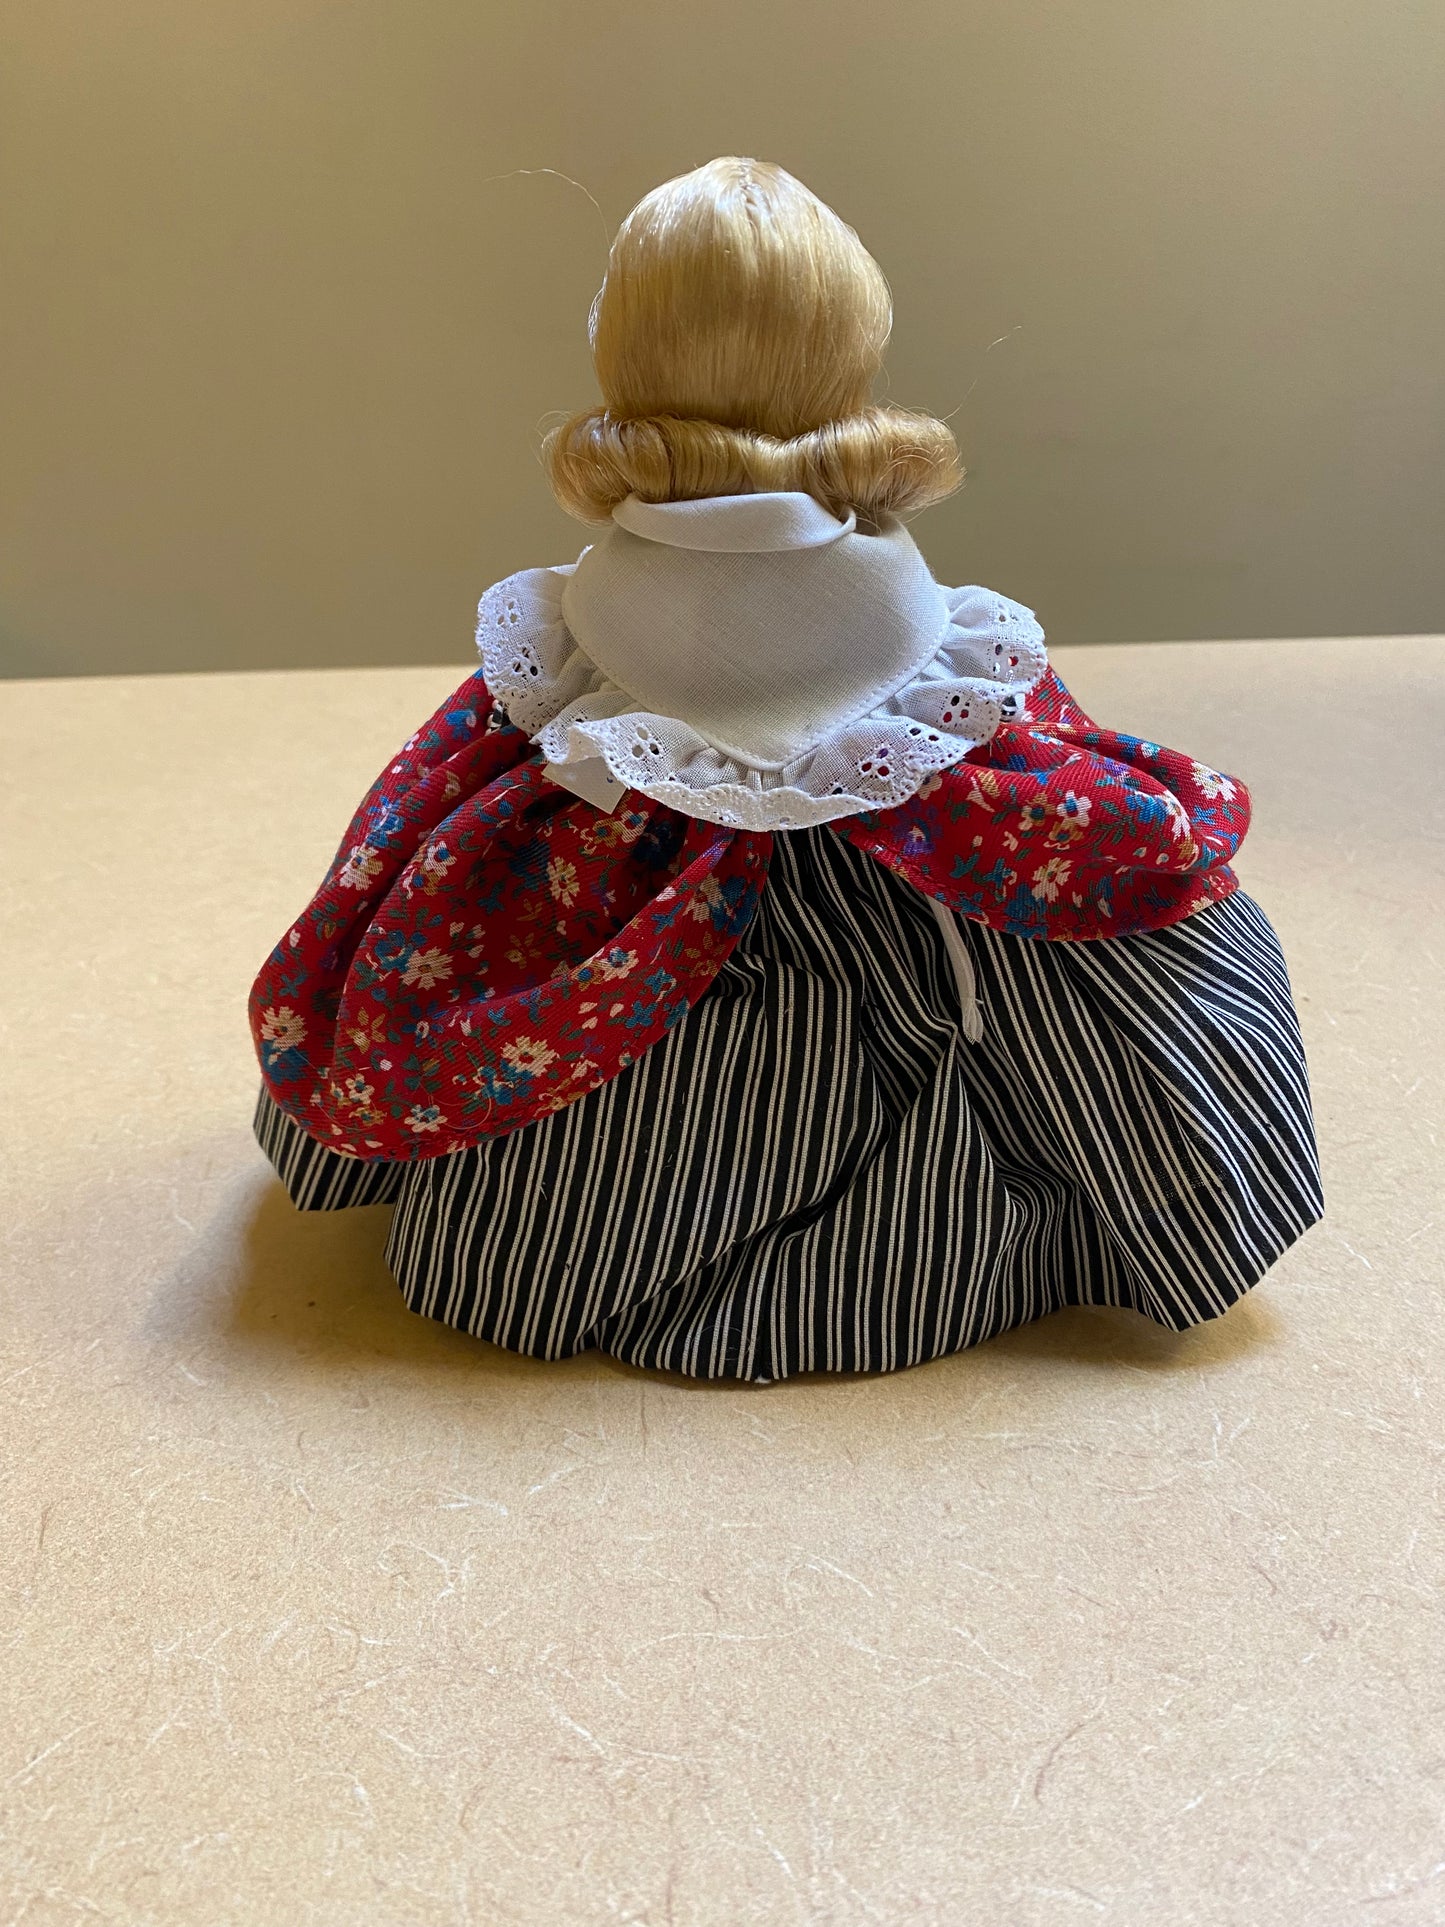 Madame Alexander's "Mother Goose" Doll